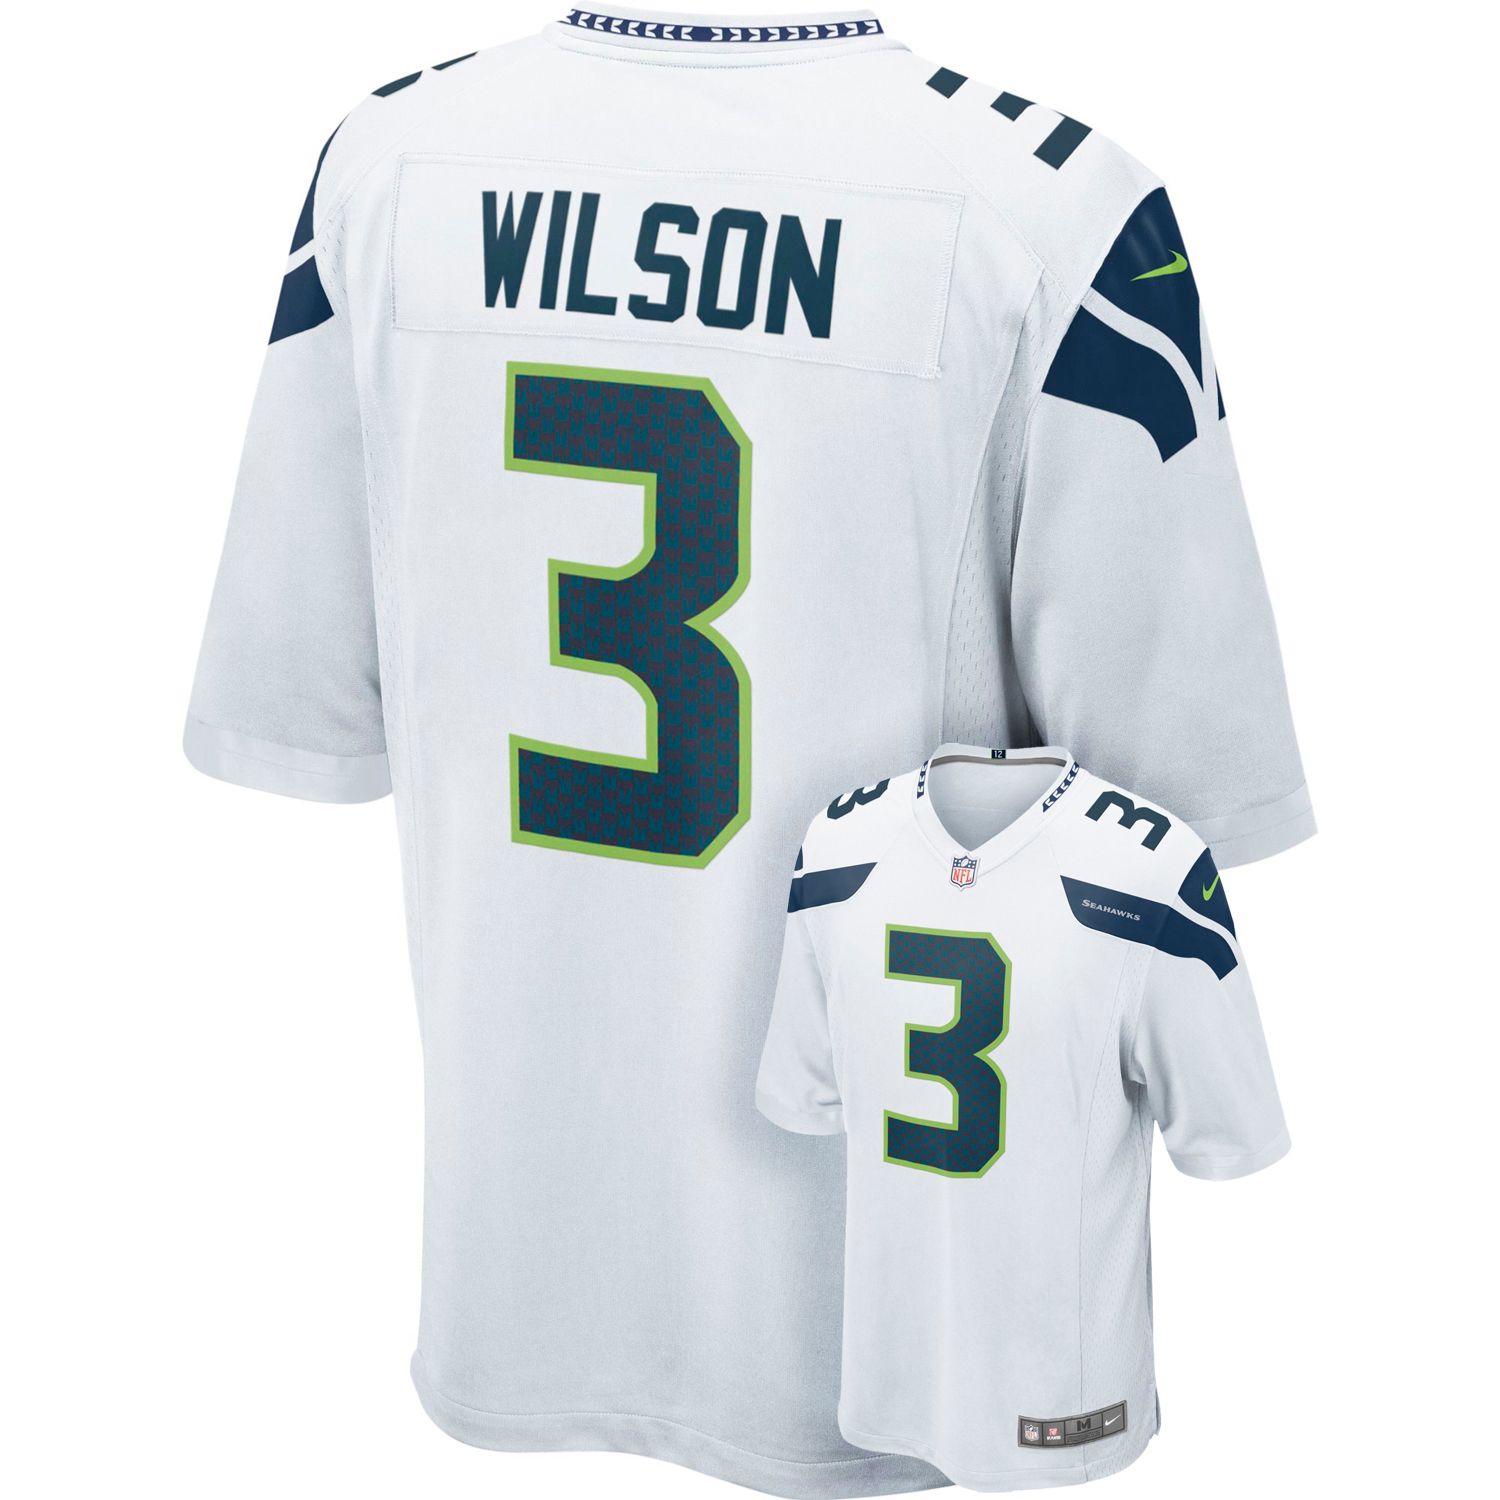 russell wilson replica jersey